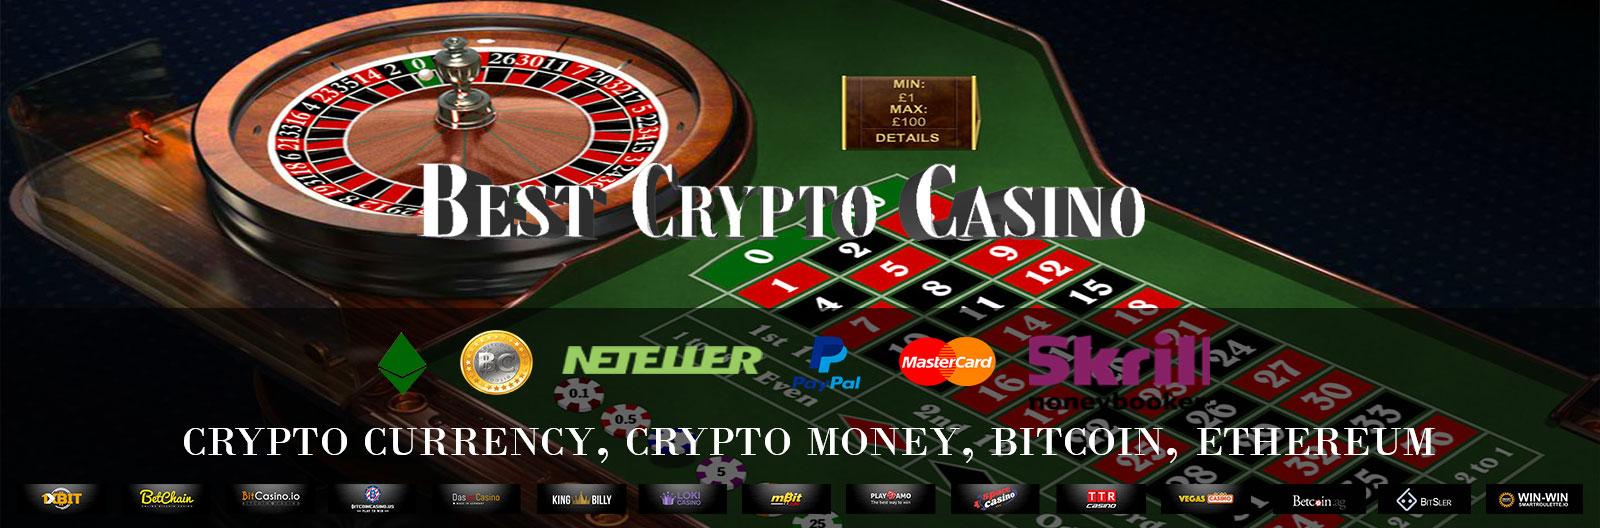 Gaminator games online casino